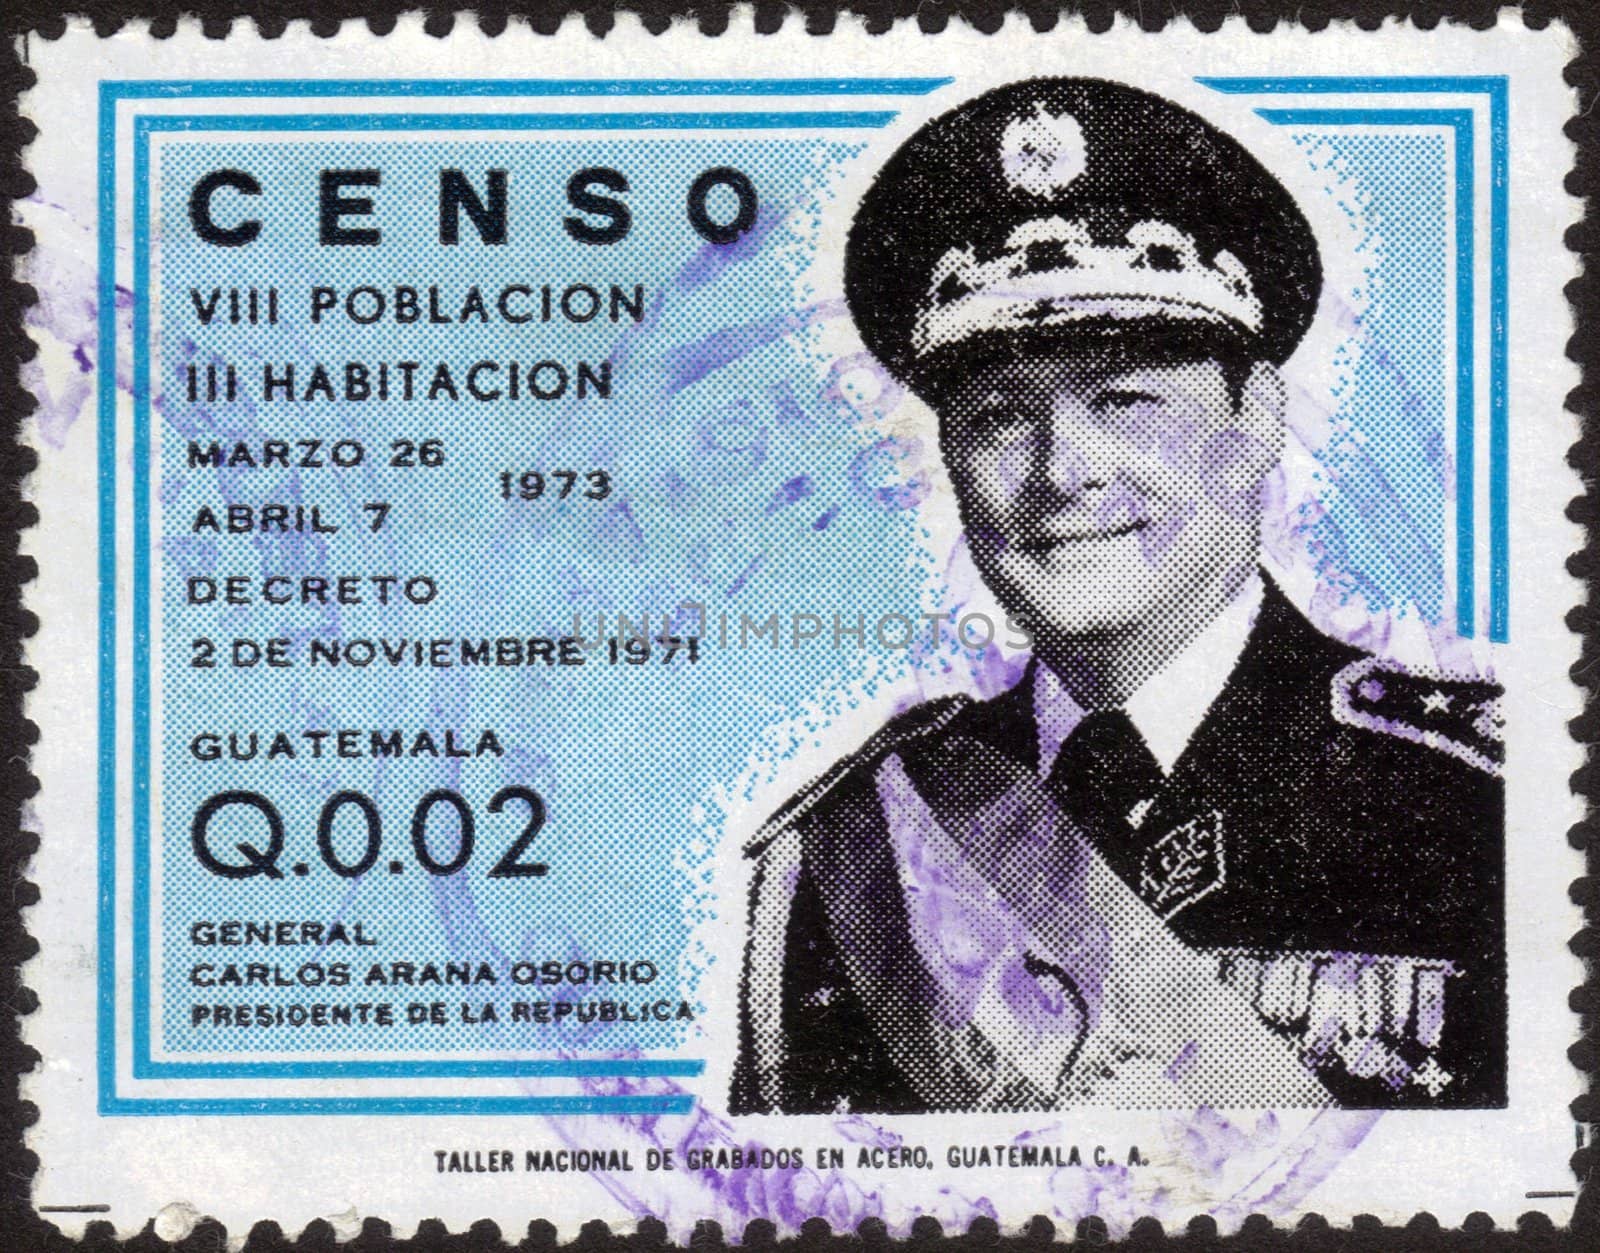 Gen. Carlos Arana Osorio by irisphoto4